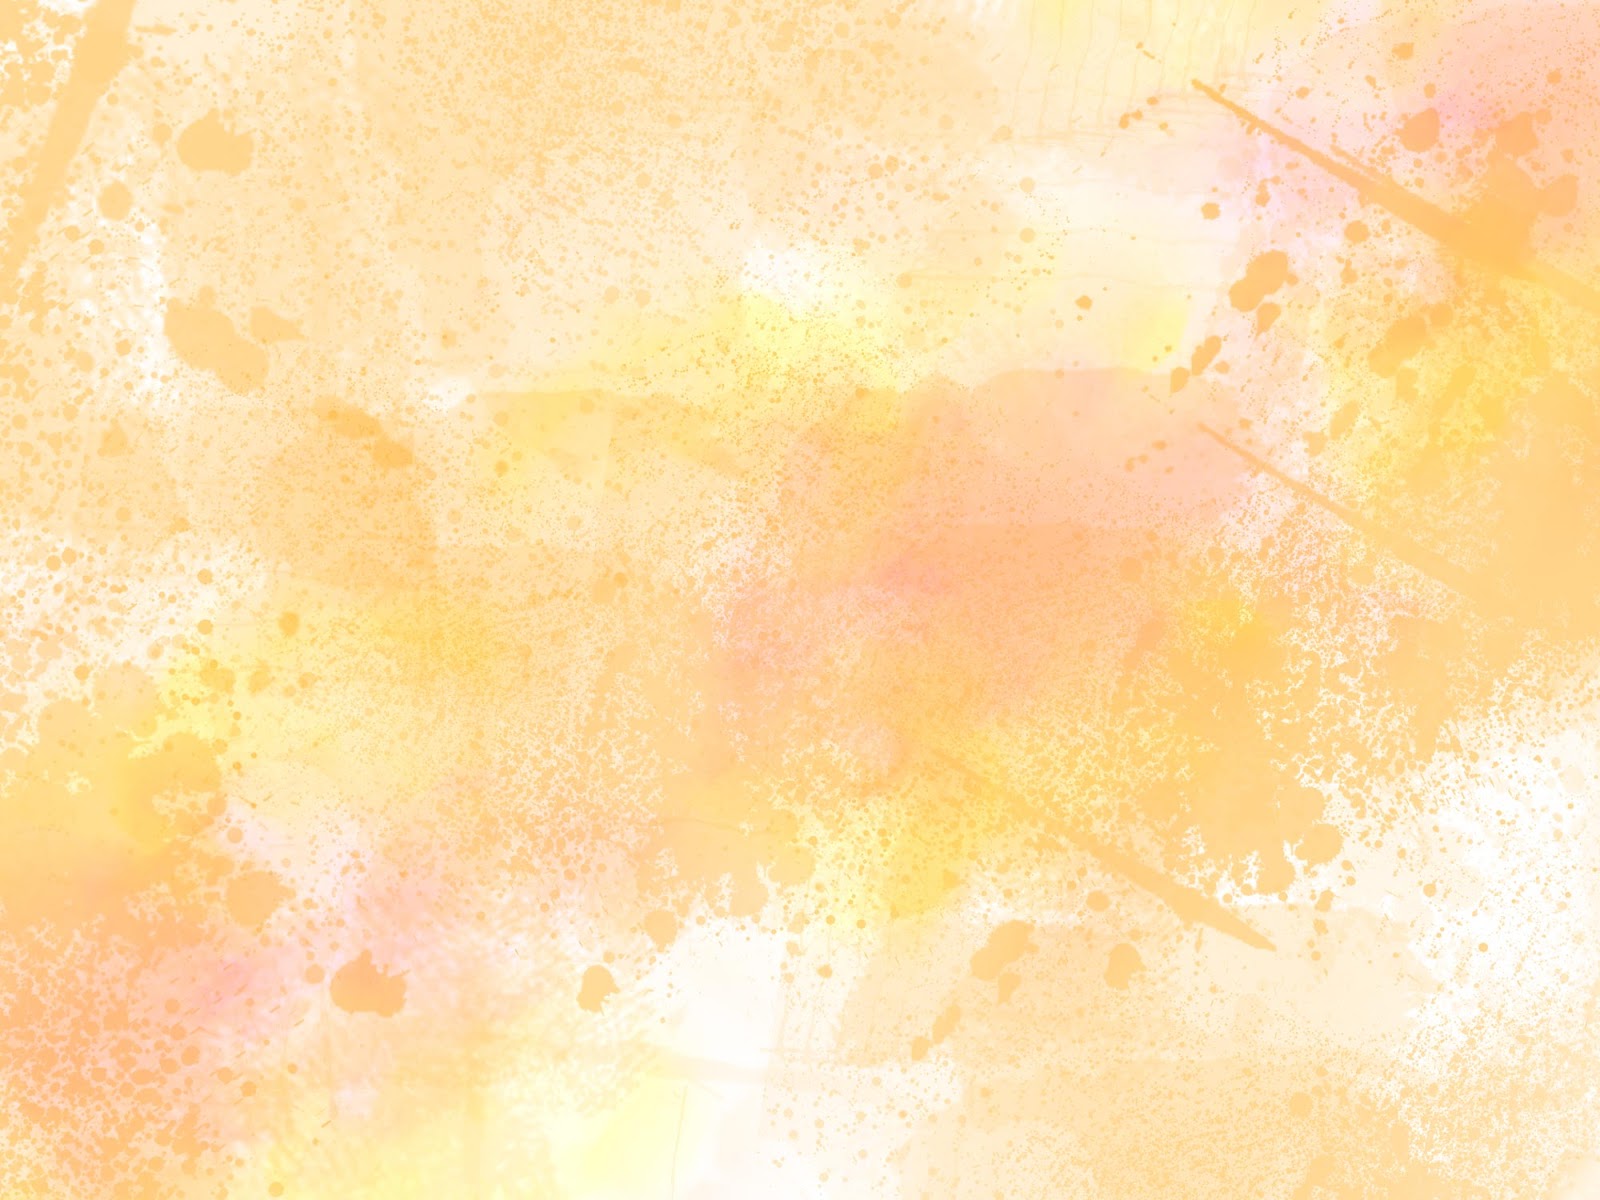 Pastel Soft Grunge Background Image Gallery